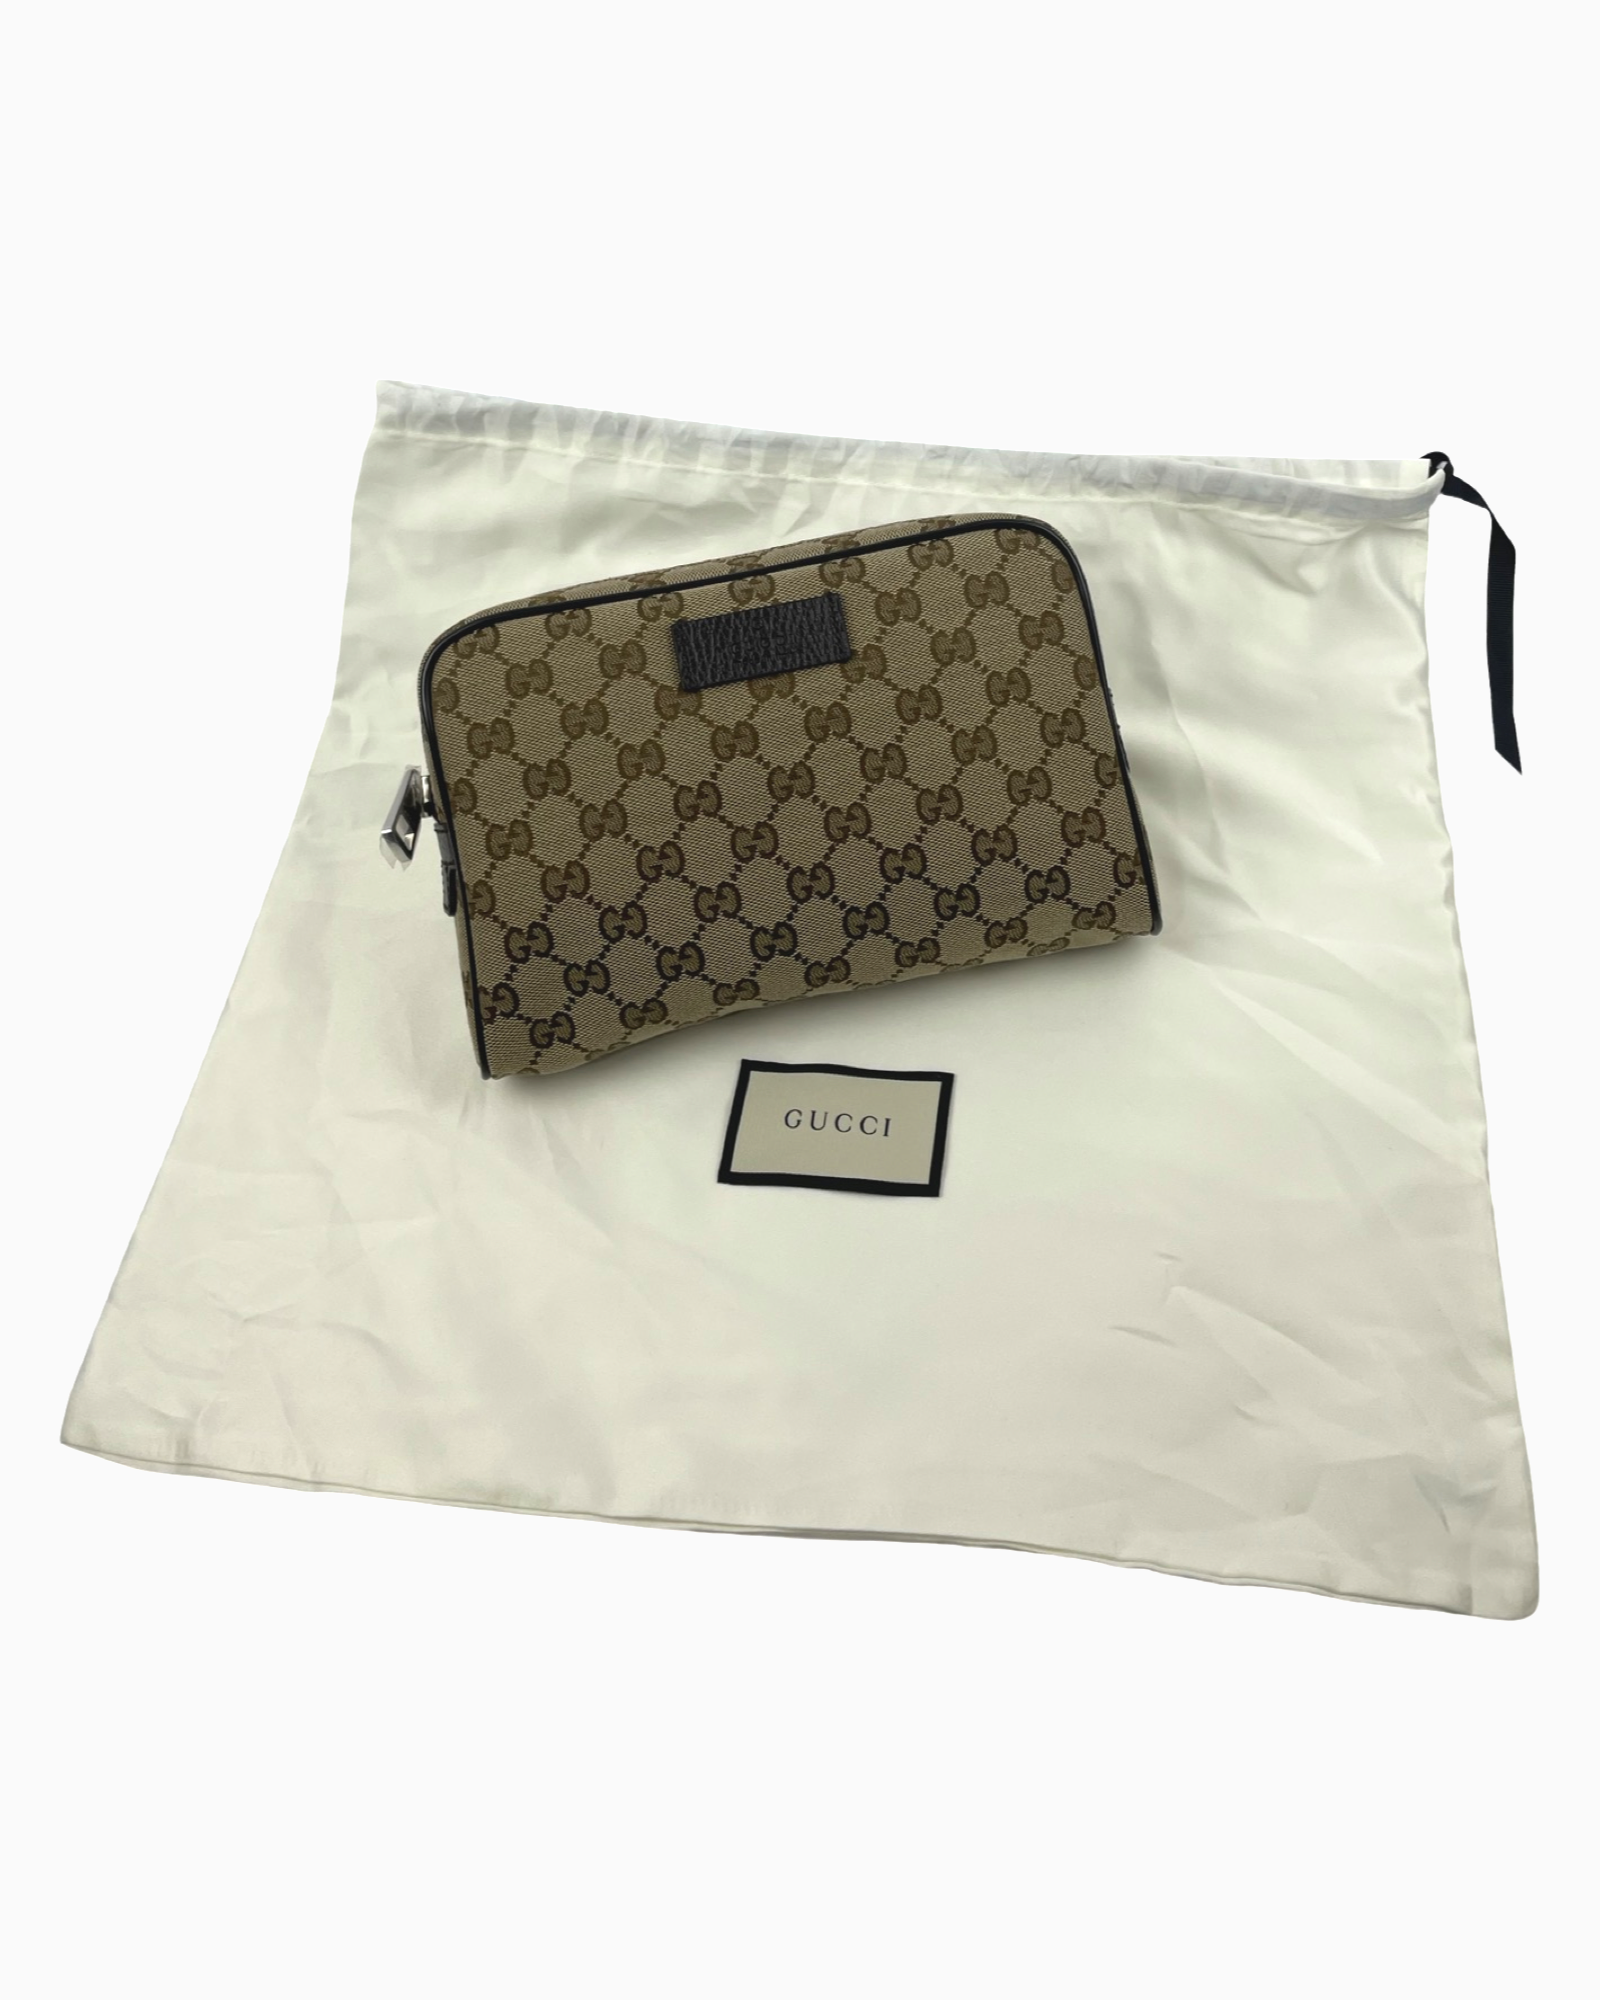 GUCCI-GG-Canvas-Leather-Waist-Bag-Beige-Brown-449174